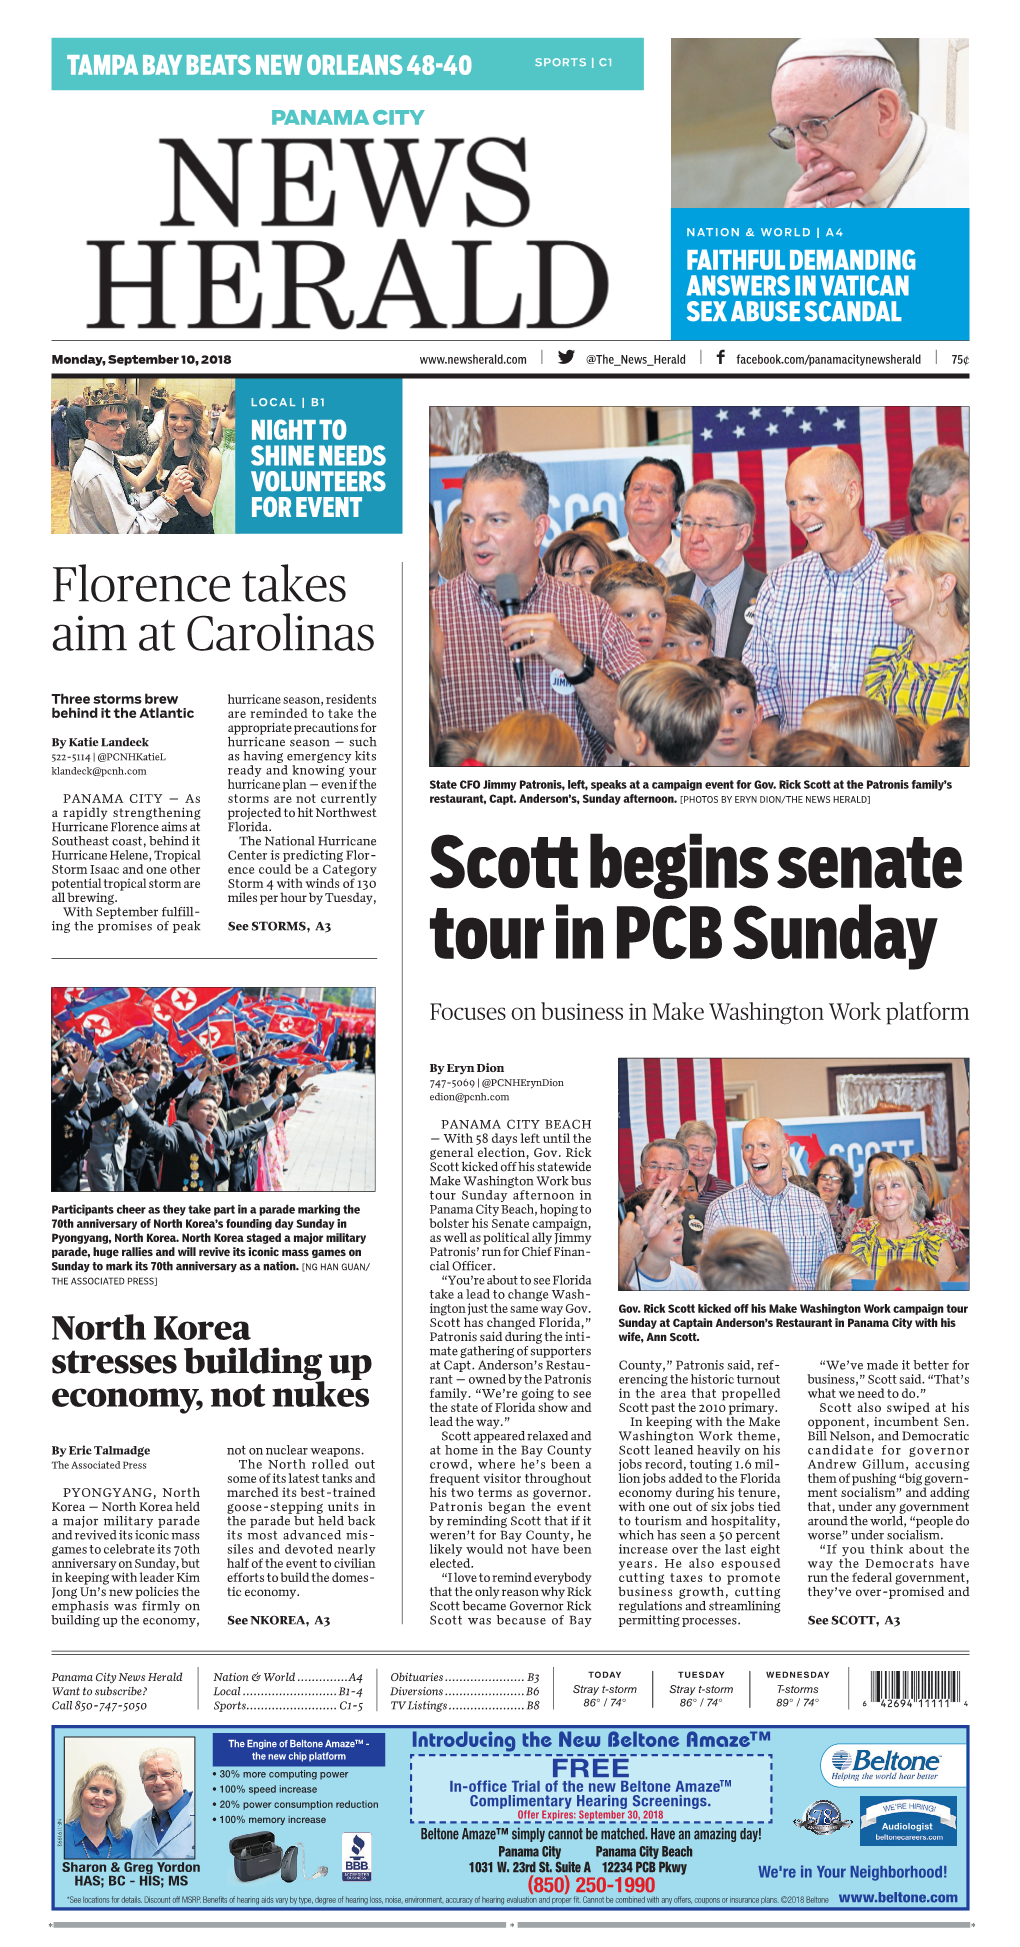 Scott Begins Senate Tour in PCB Sunday